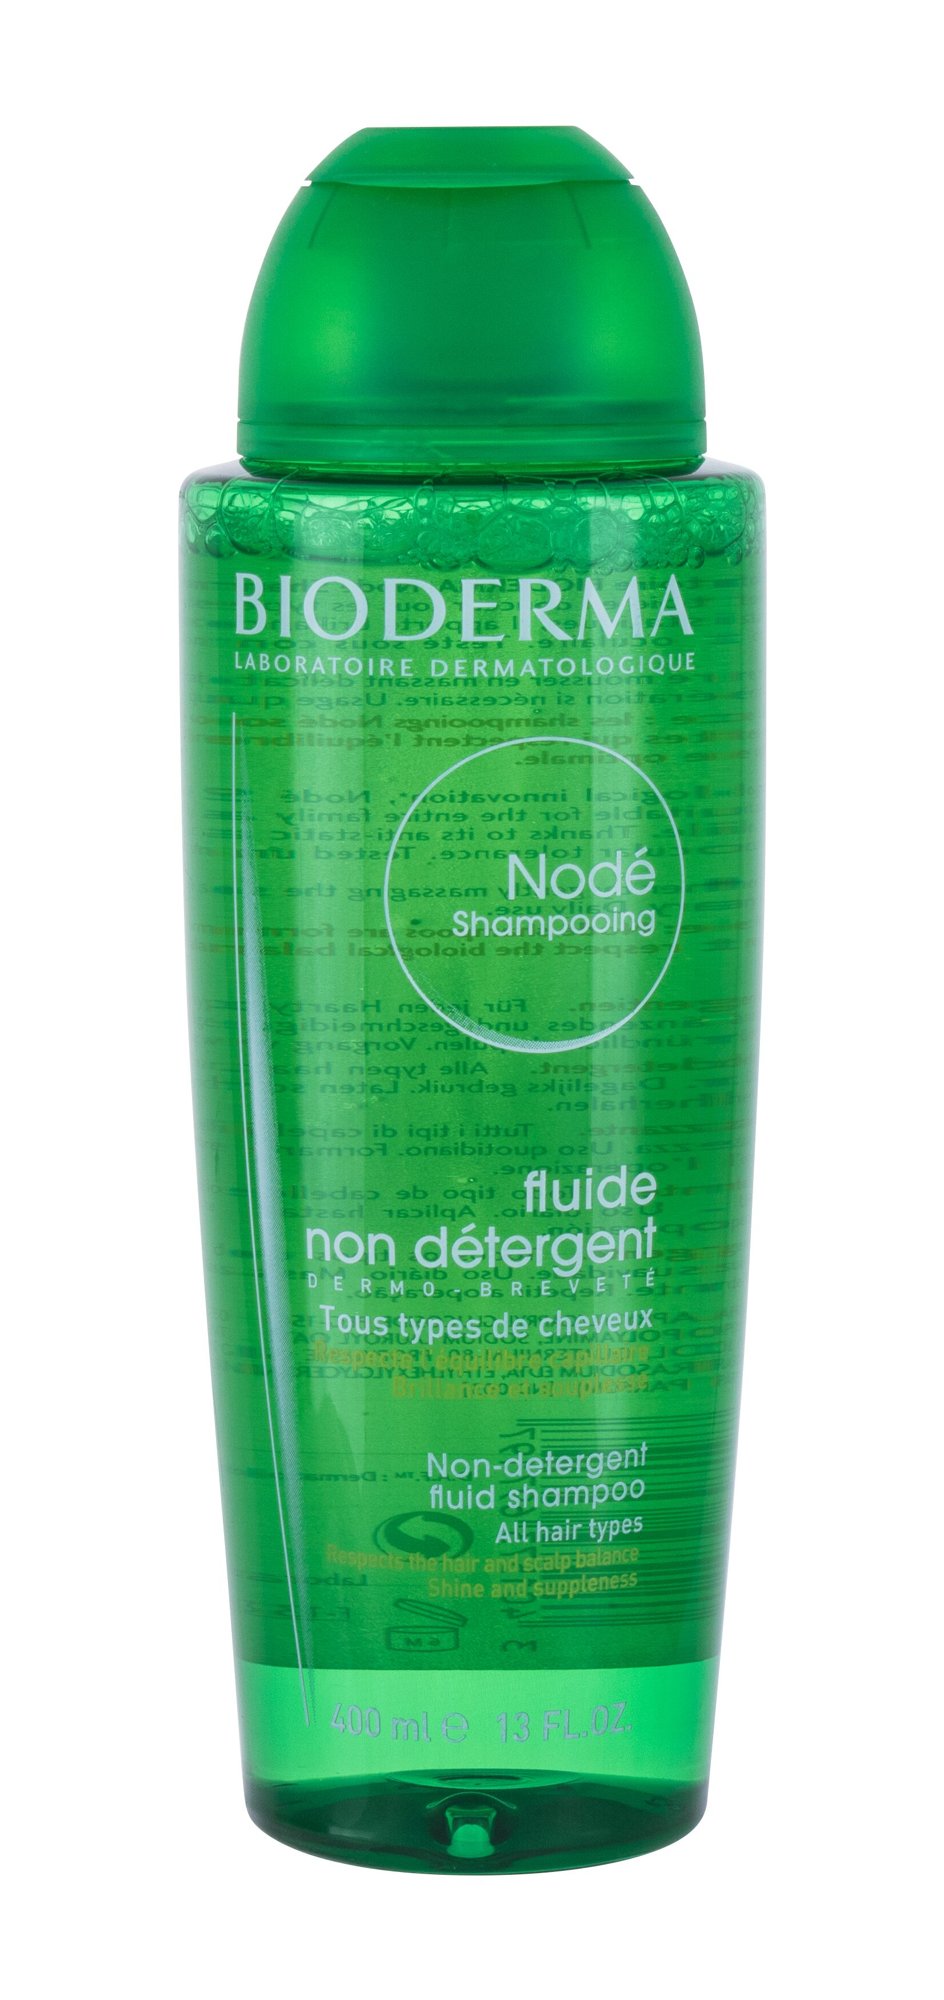 BIODERMA Nodé Non-Detergent Fluid Shampoo šampūnas